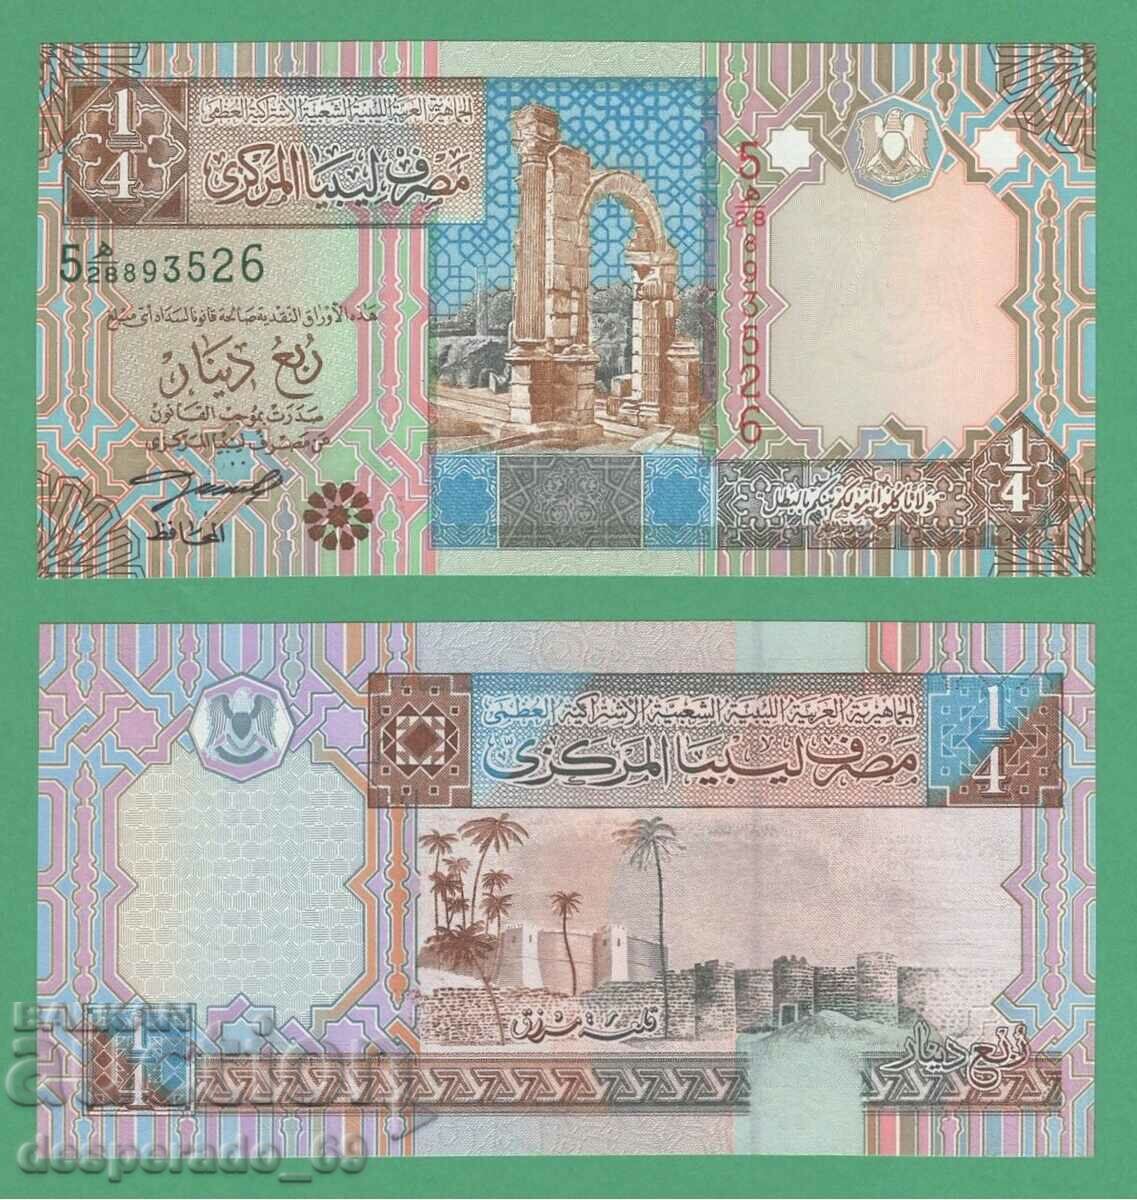 (¯` '• .¸ Libya 1/4 Dinar 2002 UNC •. •' ´¯)